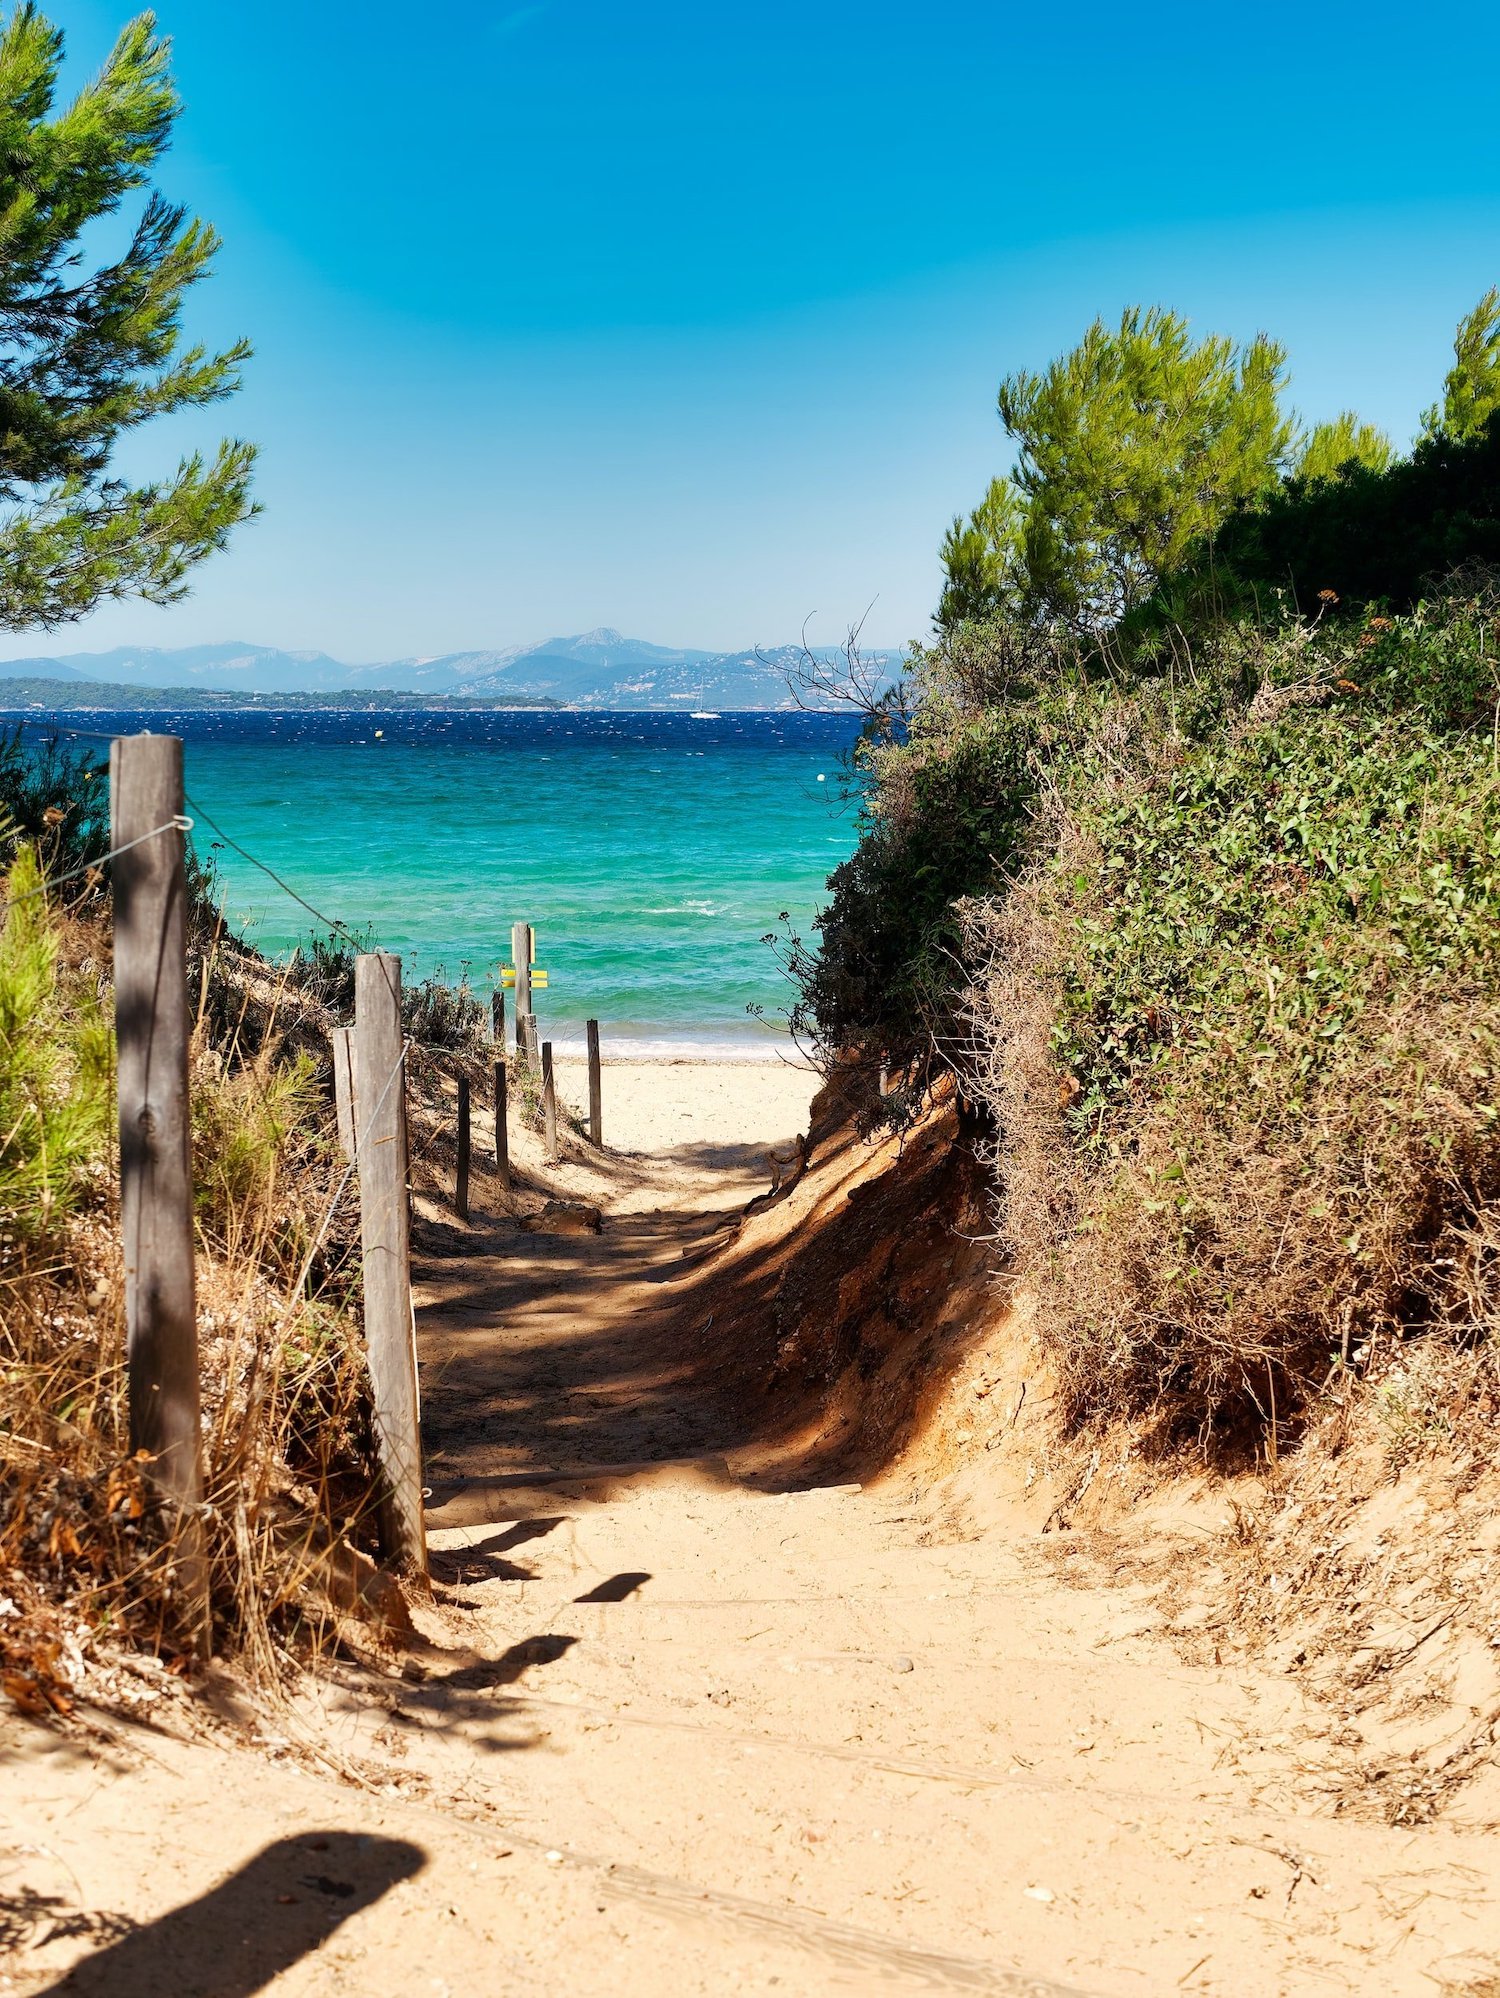 Exceptional villa and beaches around Saint-Tropez on the Mediterranean coast